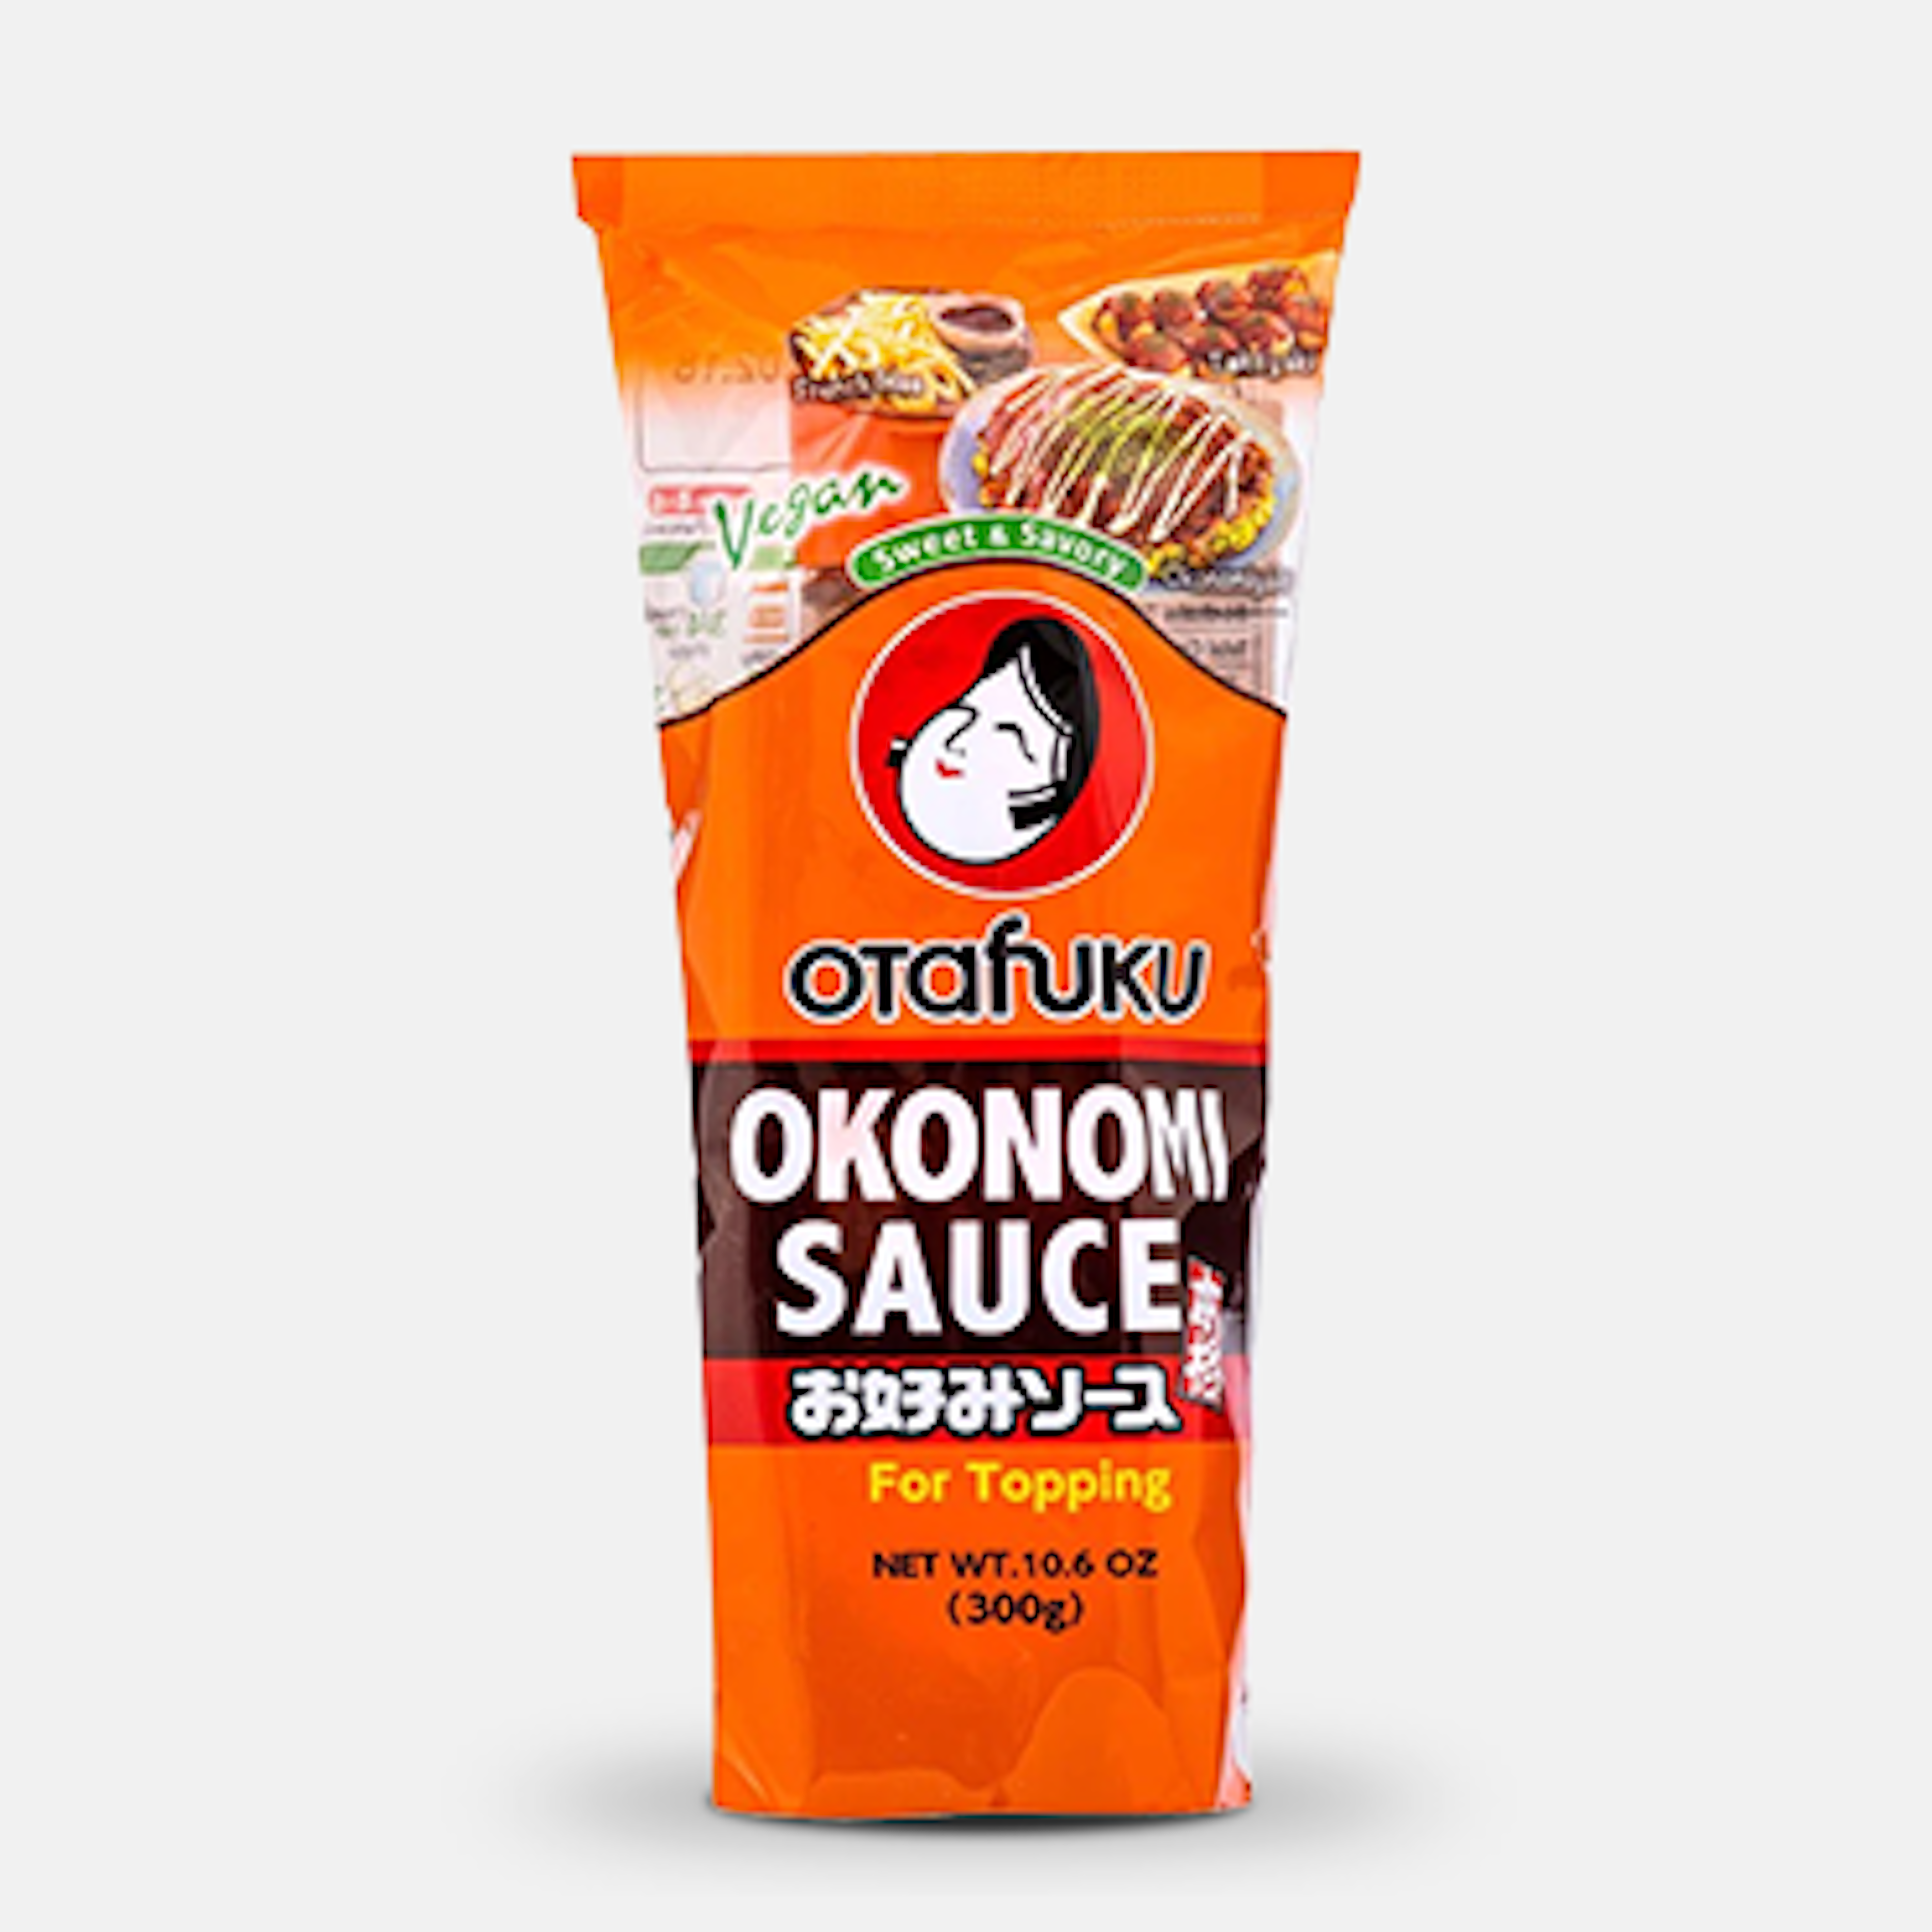 Otafuku Okonomi Sauce 300g - eine harmonische Balance aus Süße, Würze und Umami.